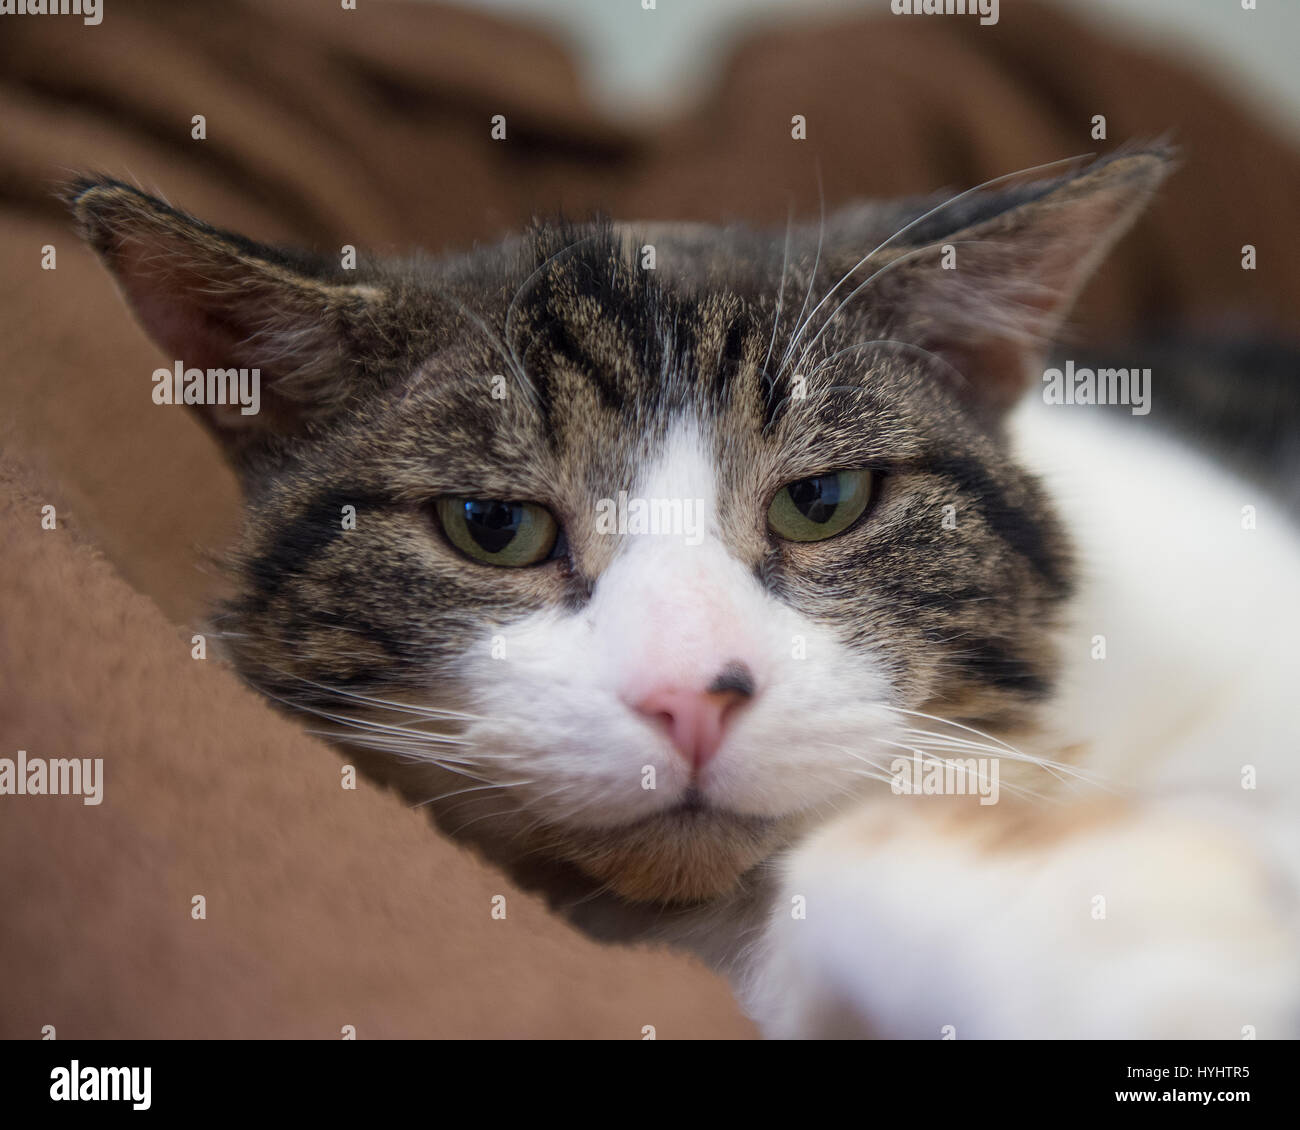 annoyed cat looking at camera Stock Photo